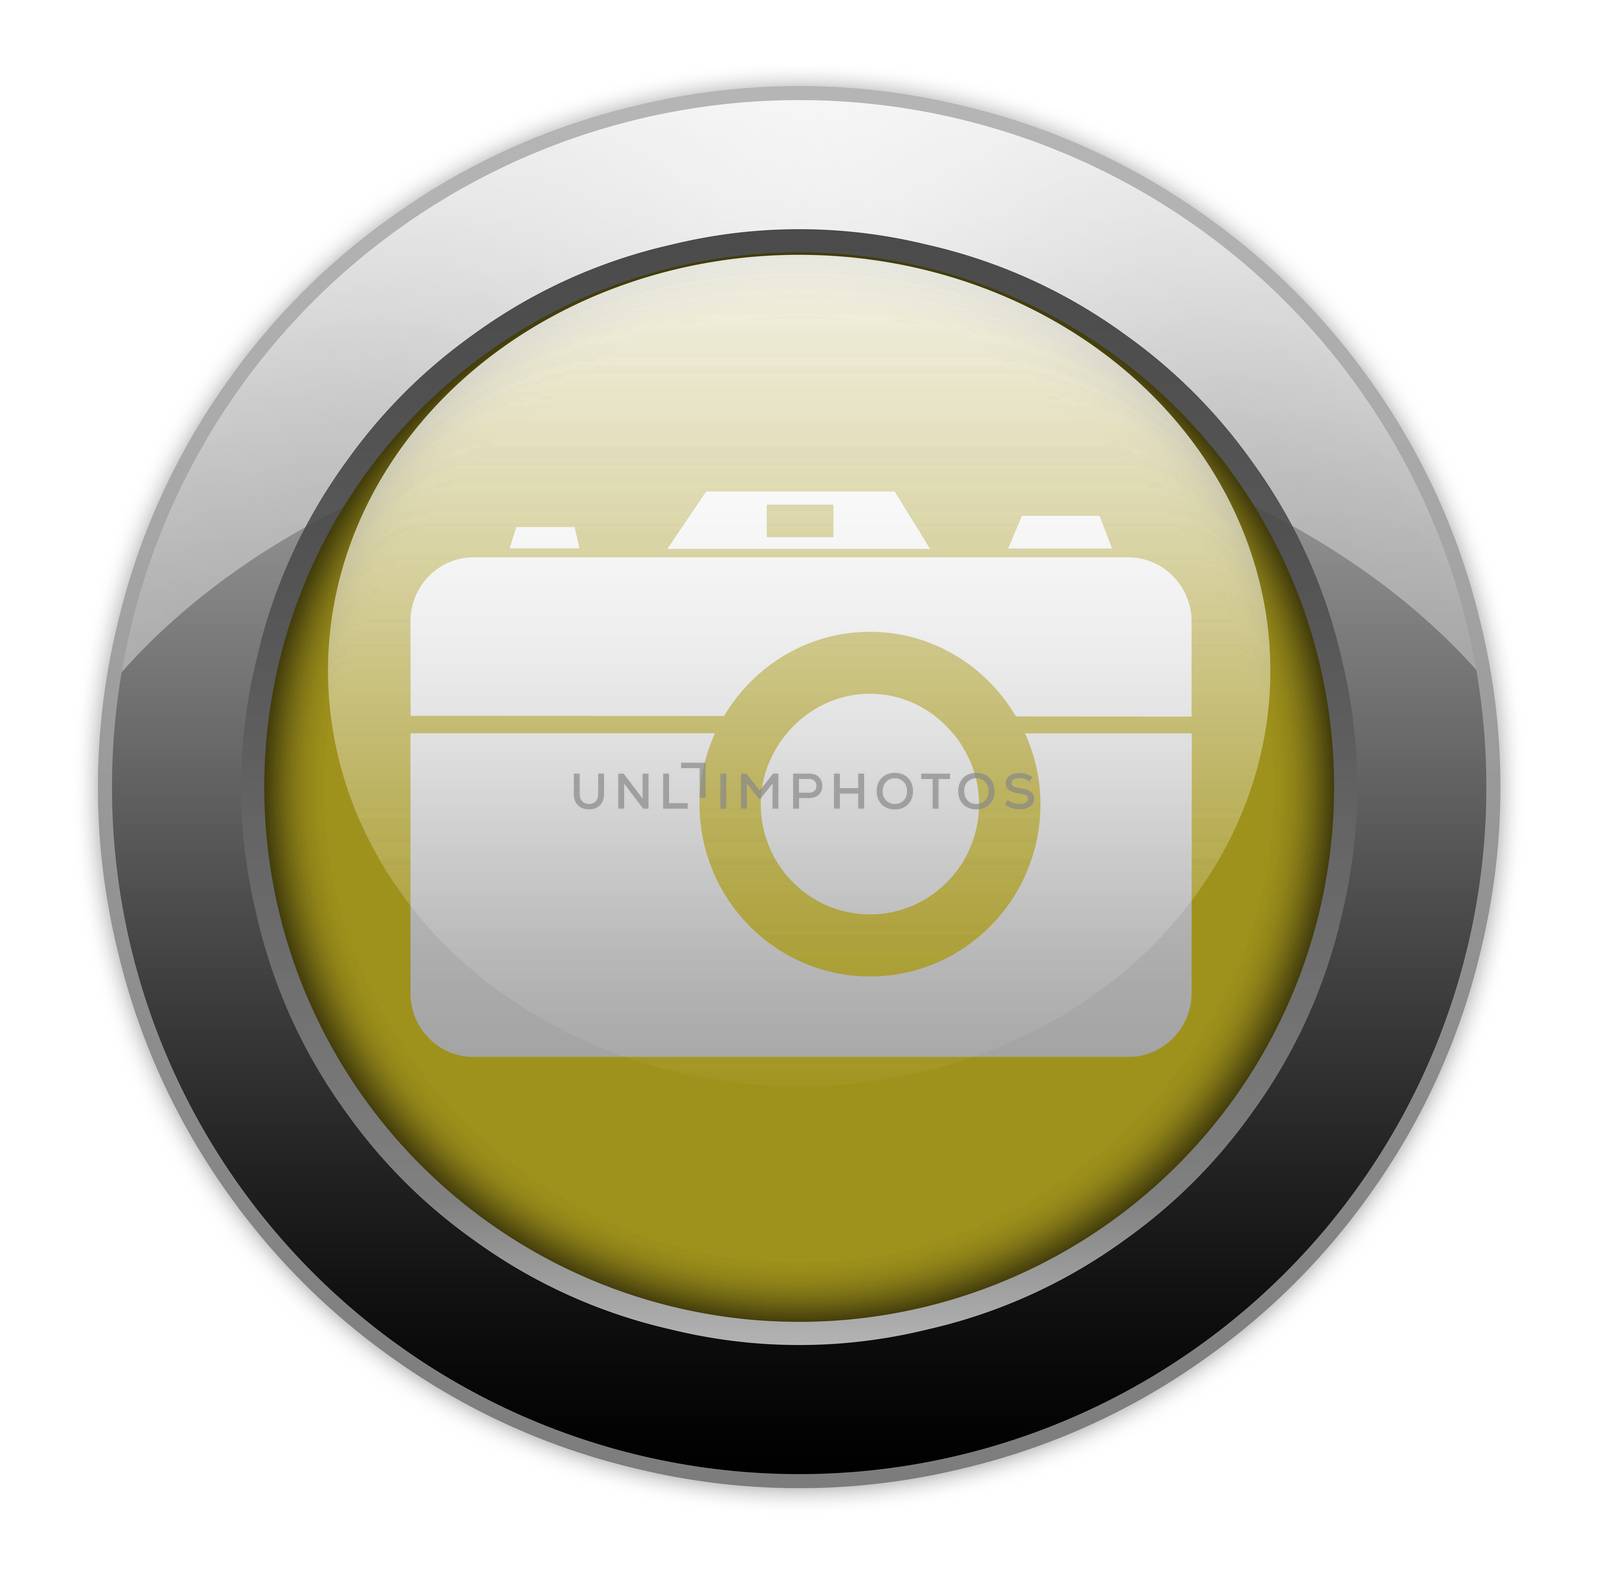 Icon, Button, Pictogram with Camera symbol